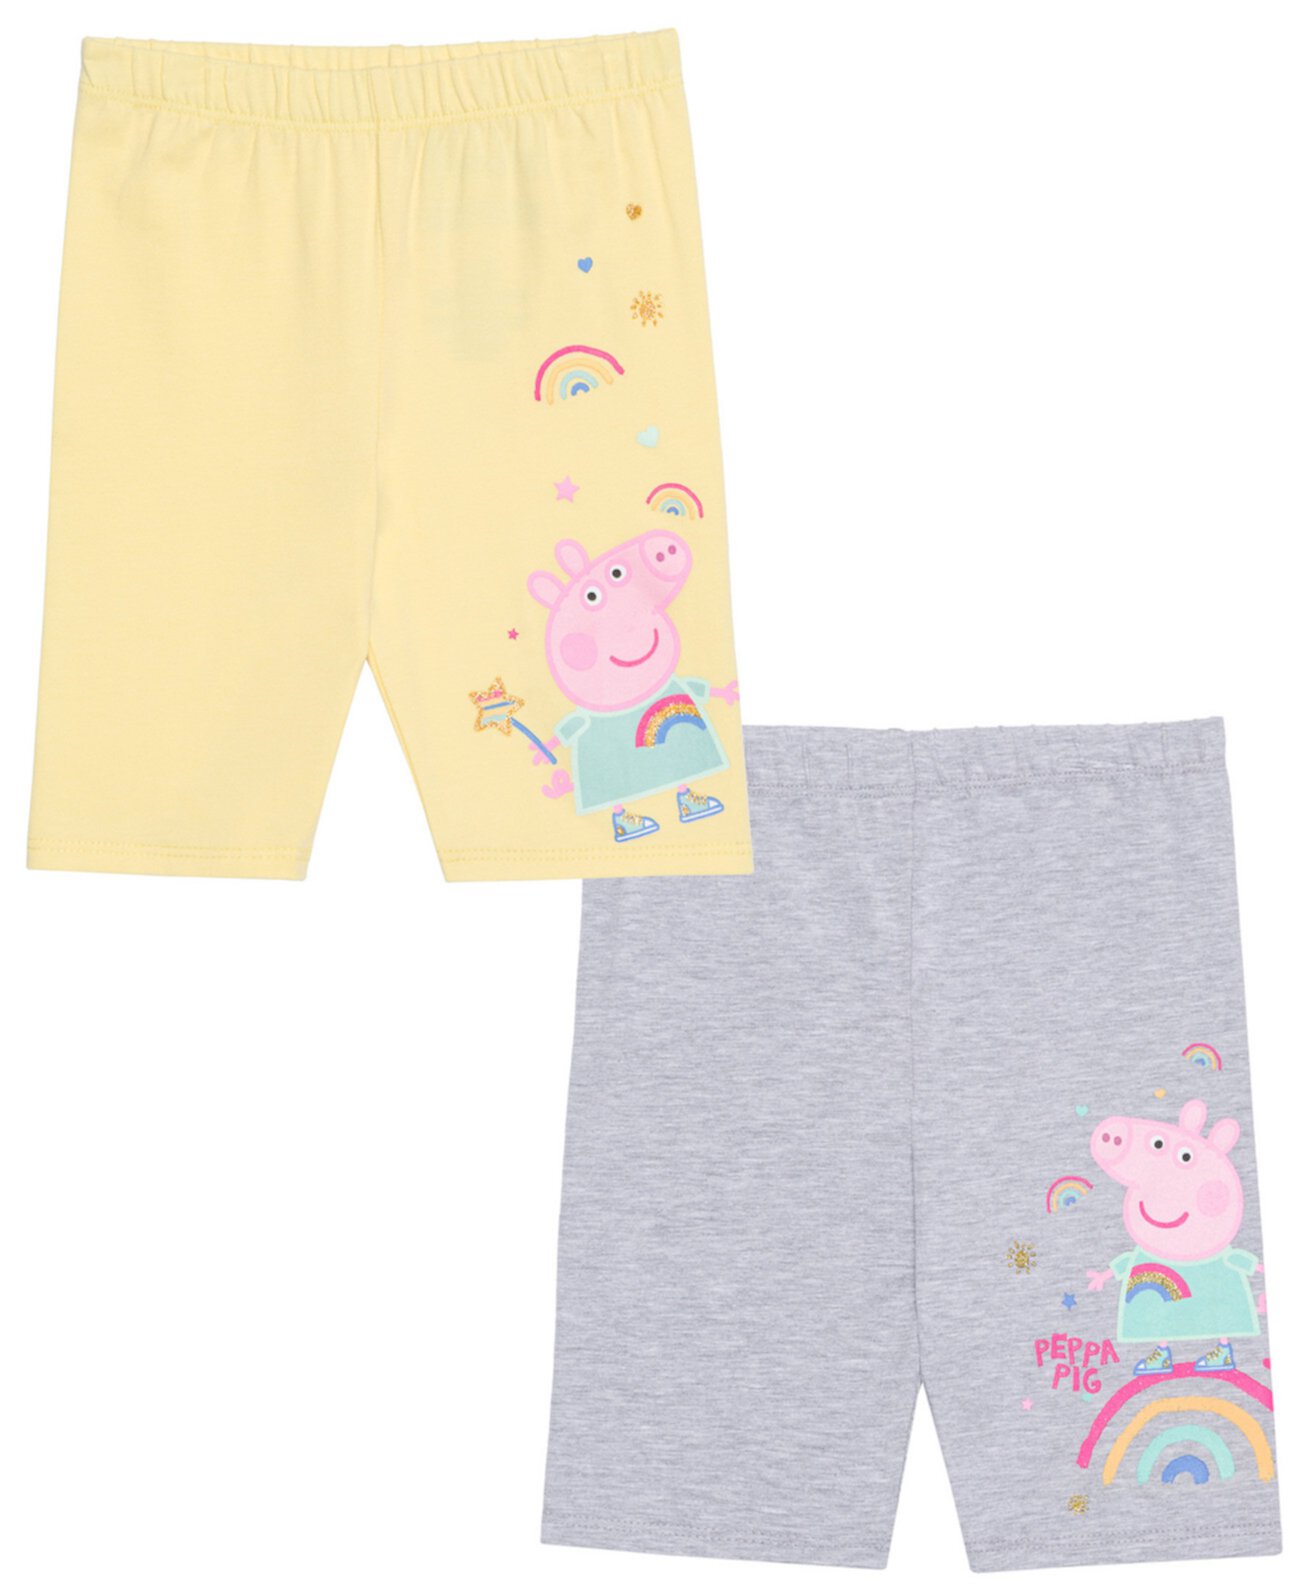 Байкерские шорты Little Girls Peppa Pig, упаковка из 2 шт. Evy of California